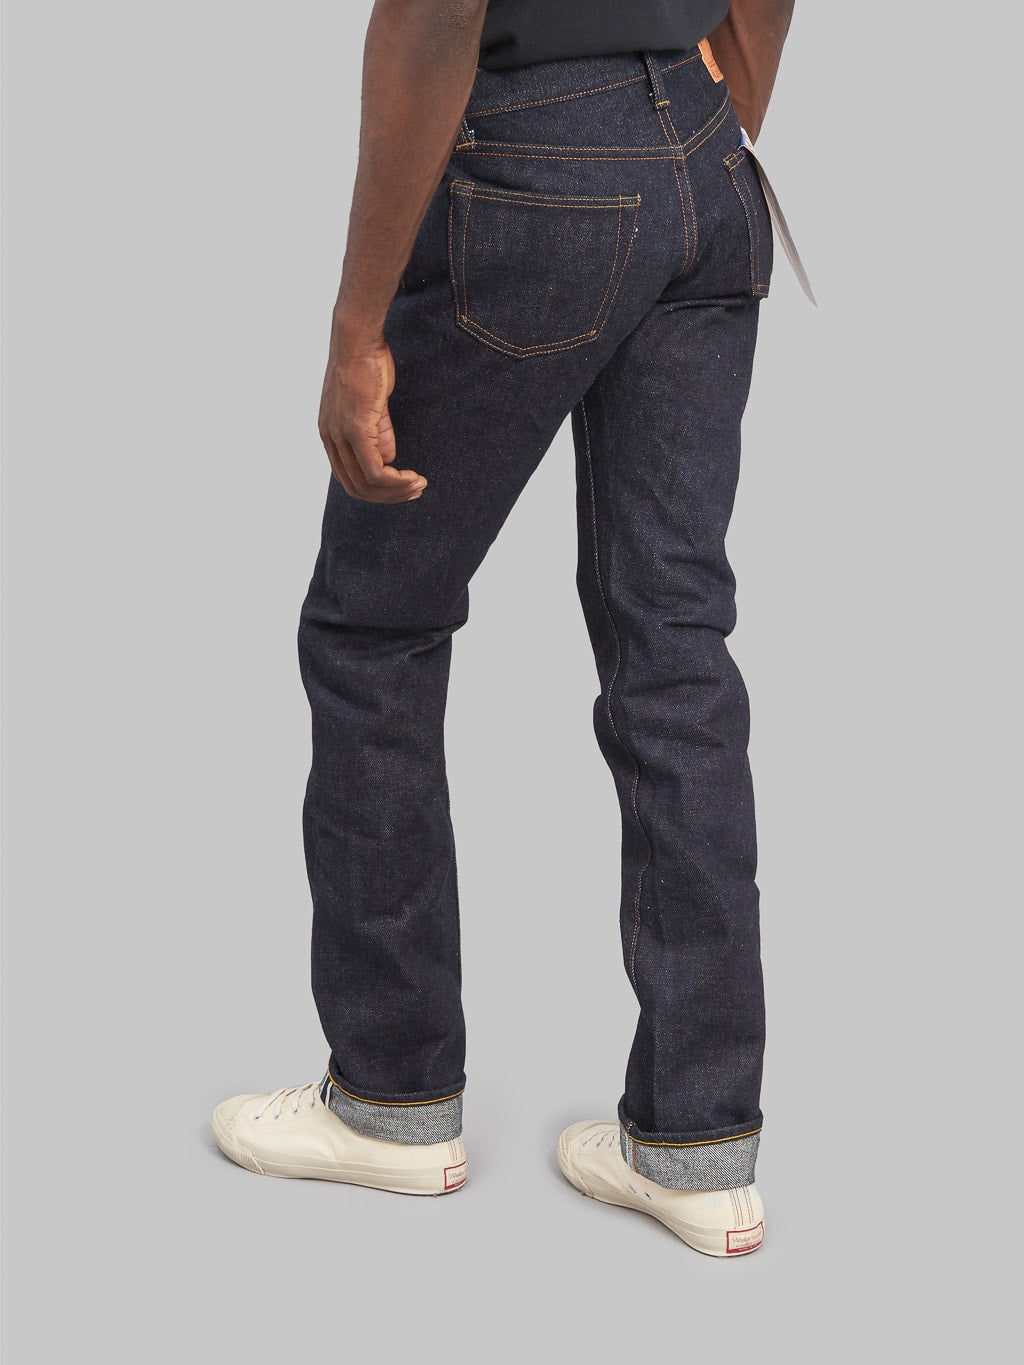 samurai jeans s710xx 25oz 25th anniversary selvedge jeans back look